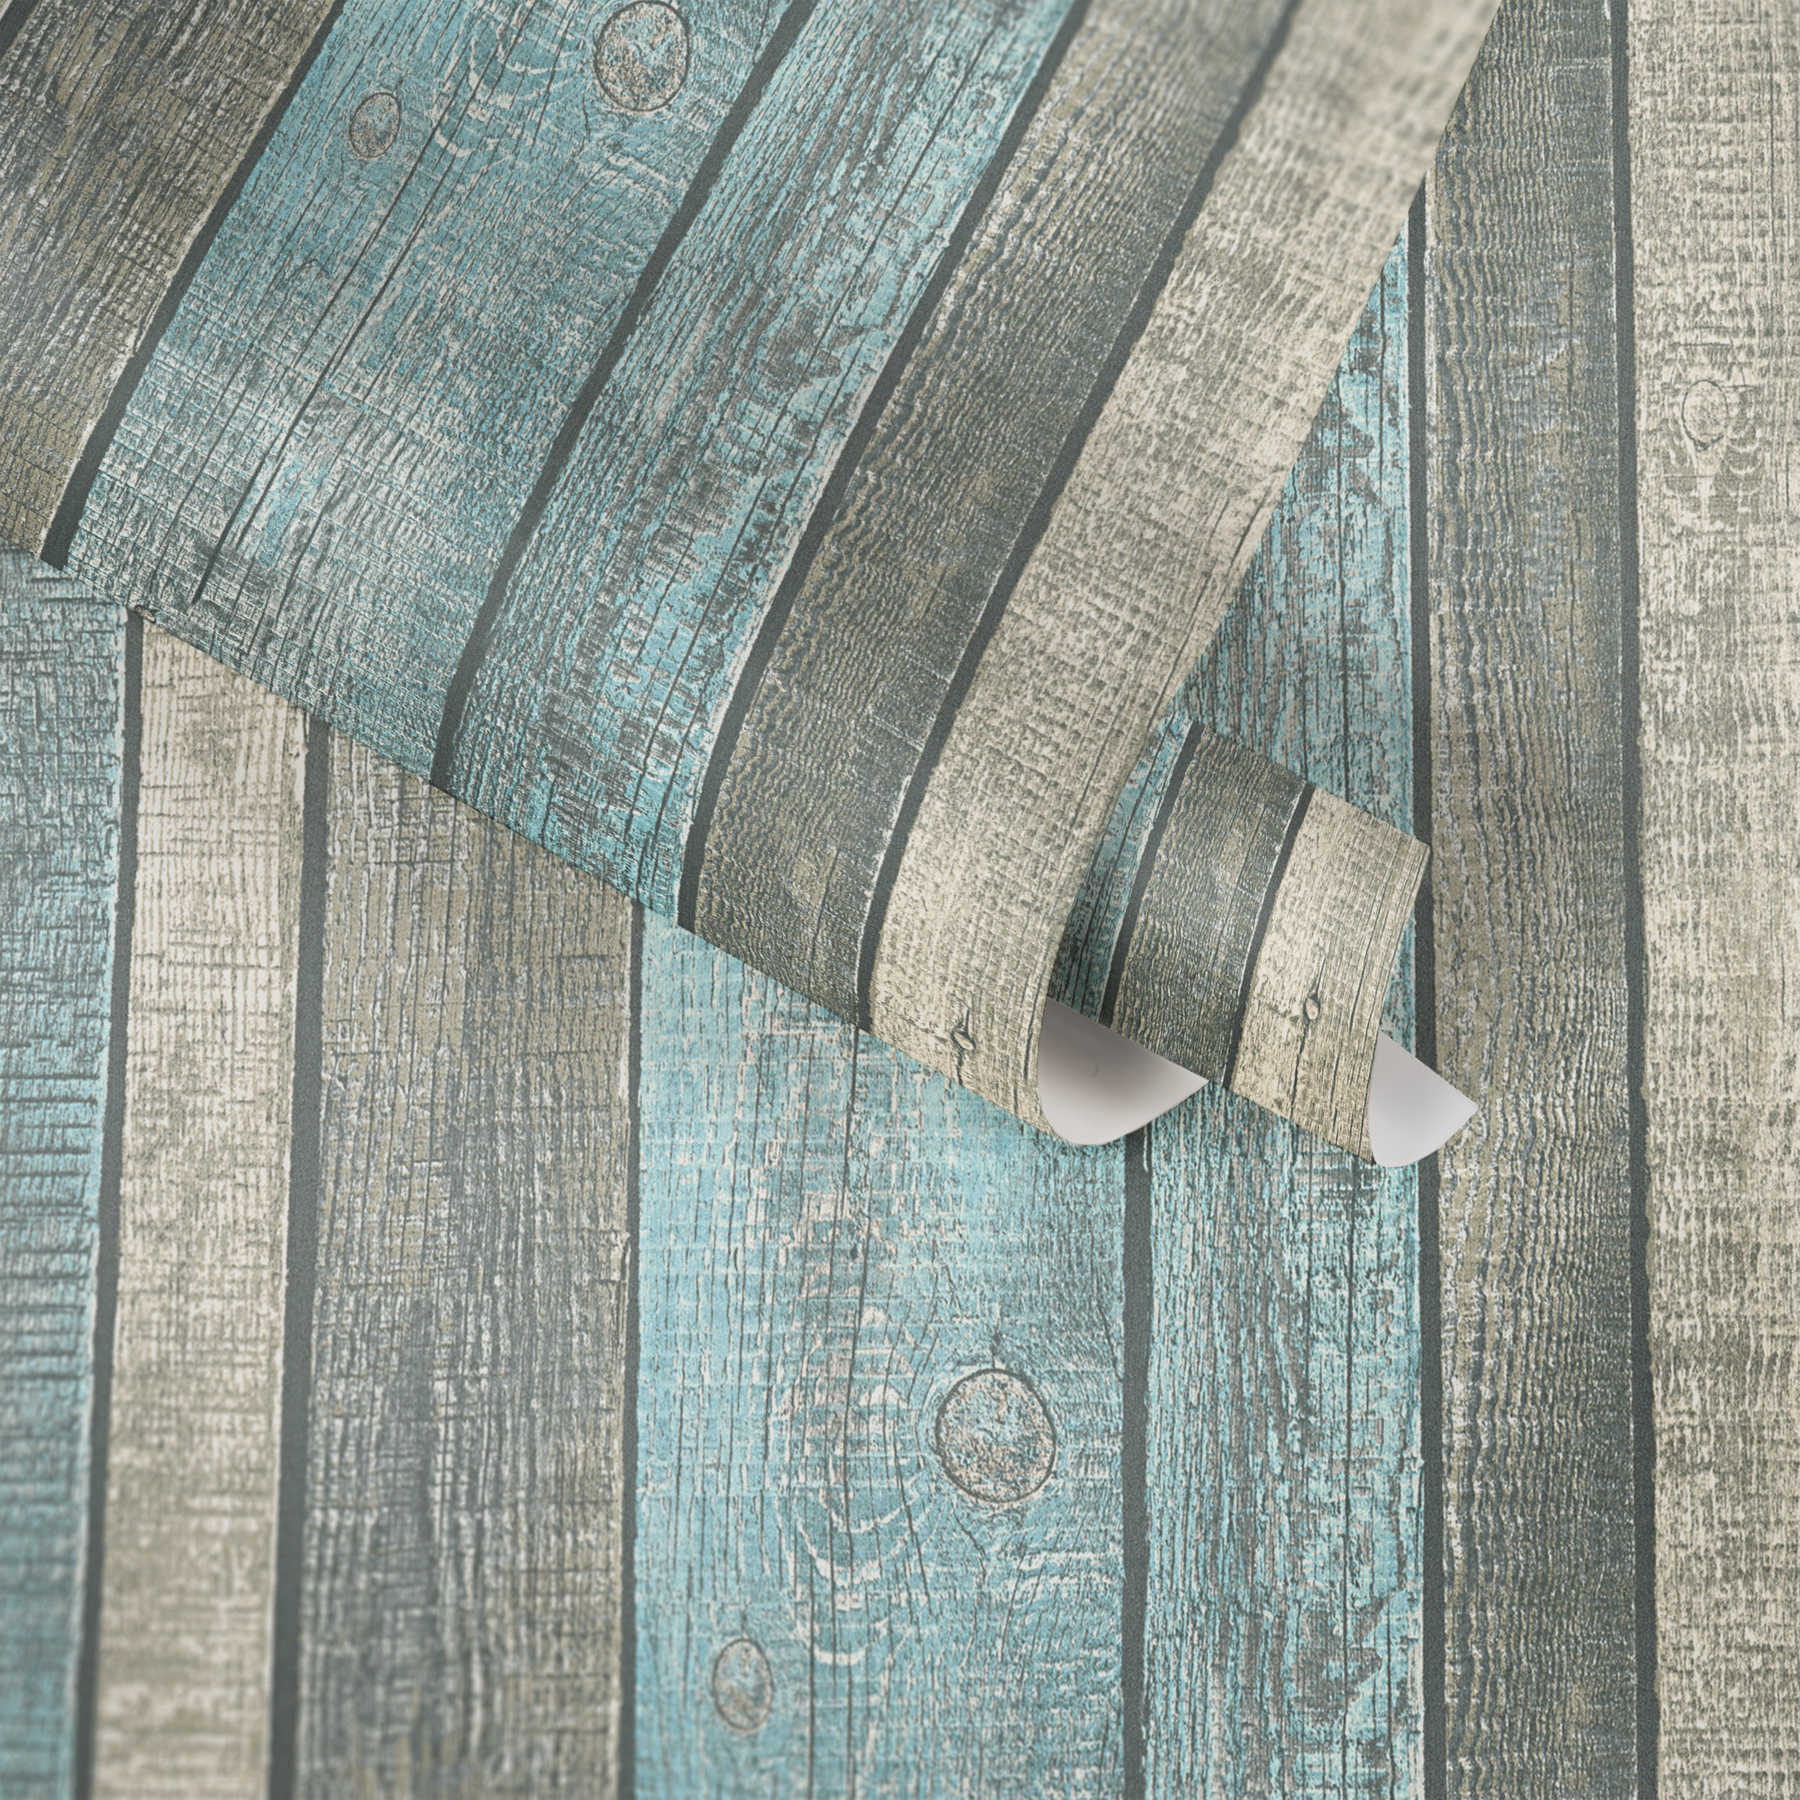             Wood look wallpaper with boards & rustic grain - blue, grey, cream
        